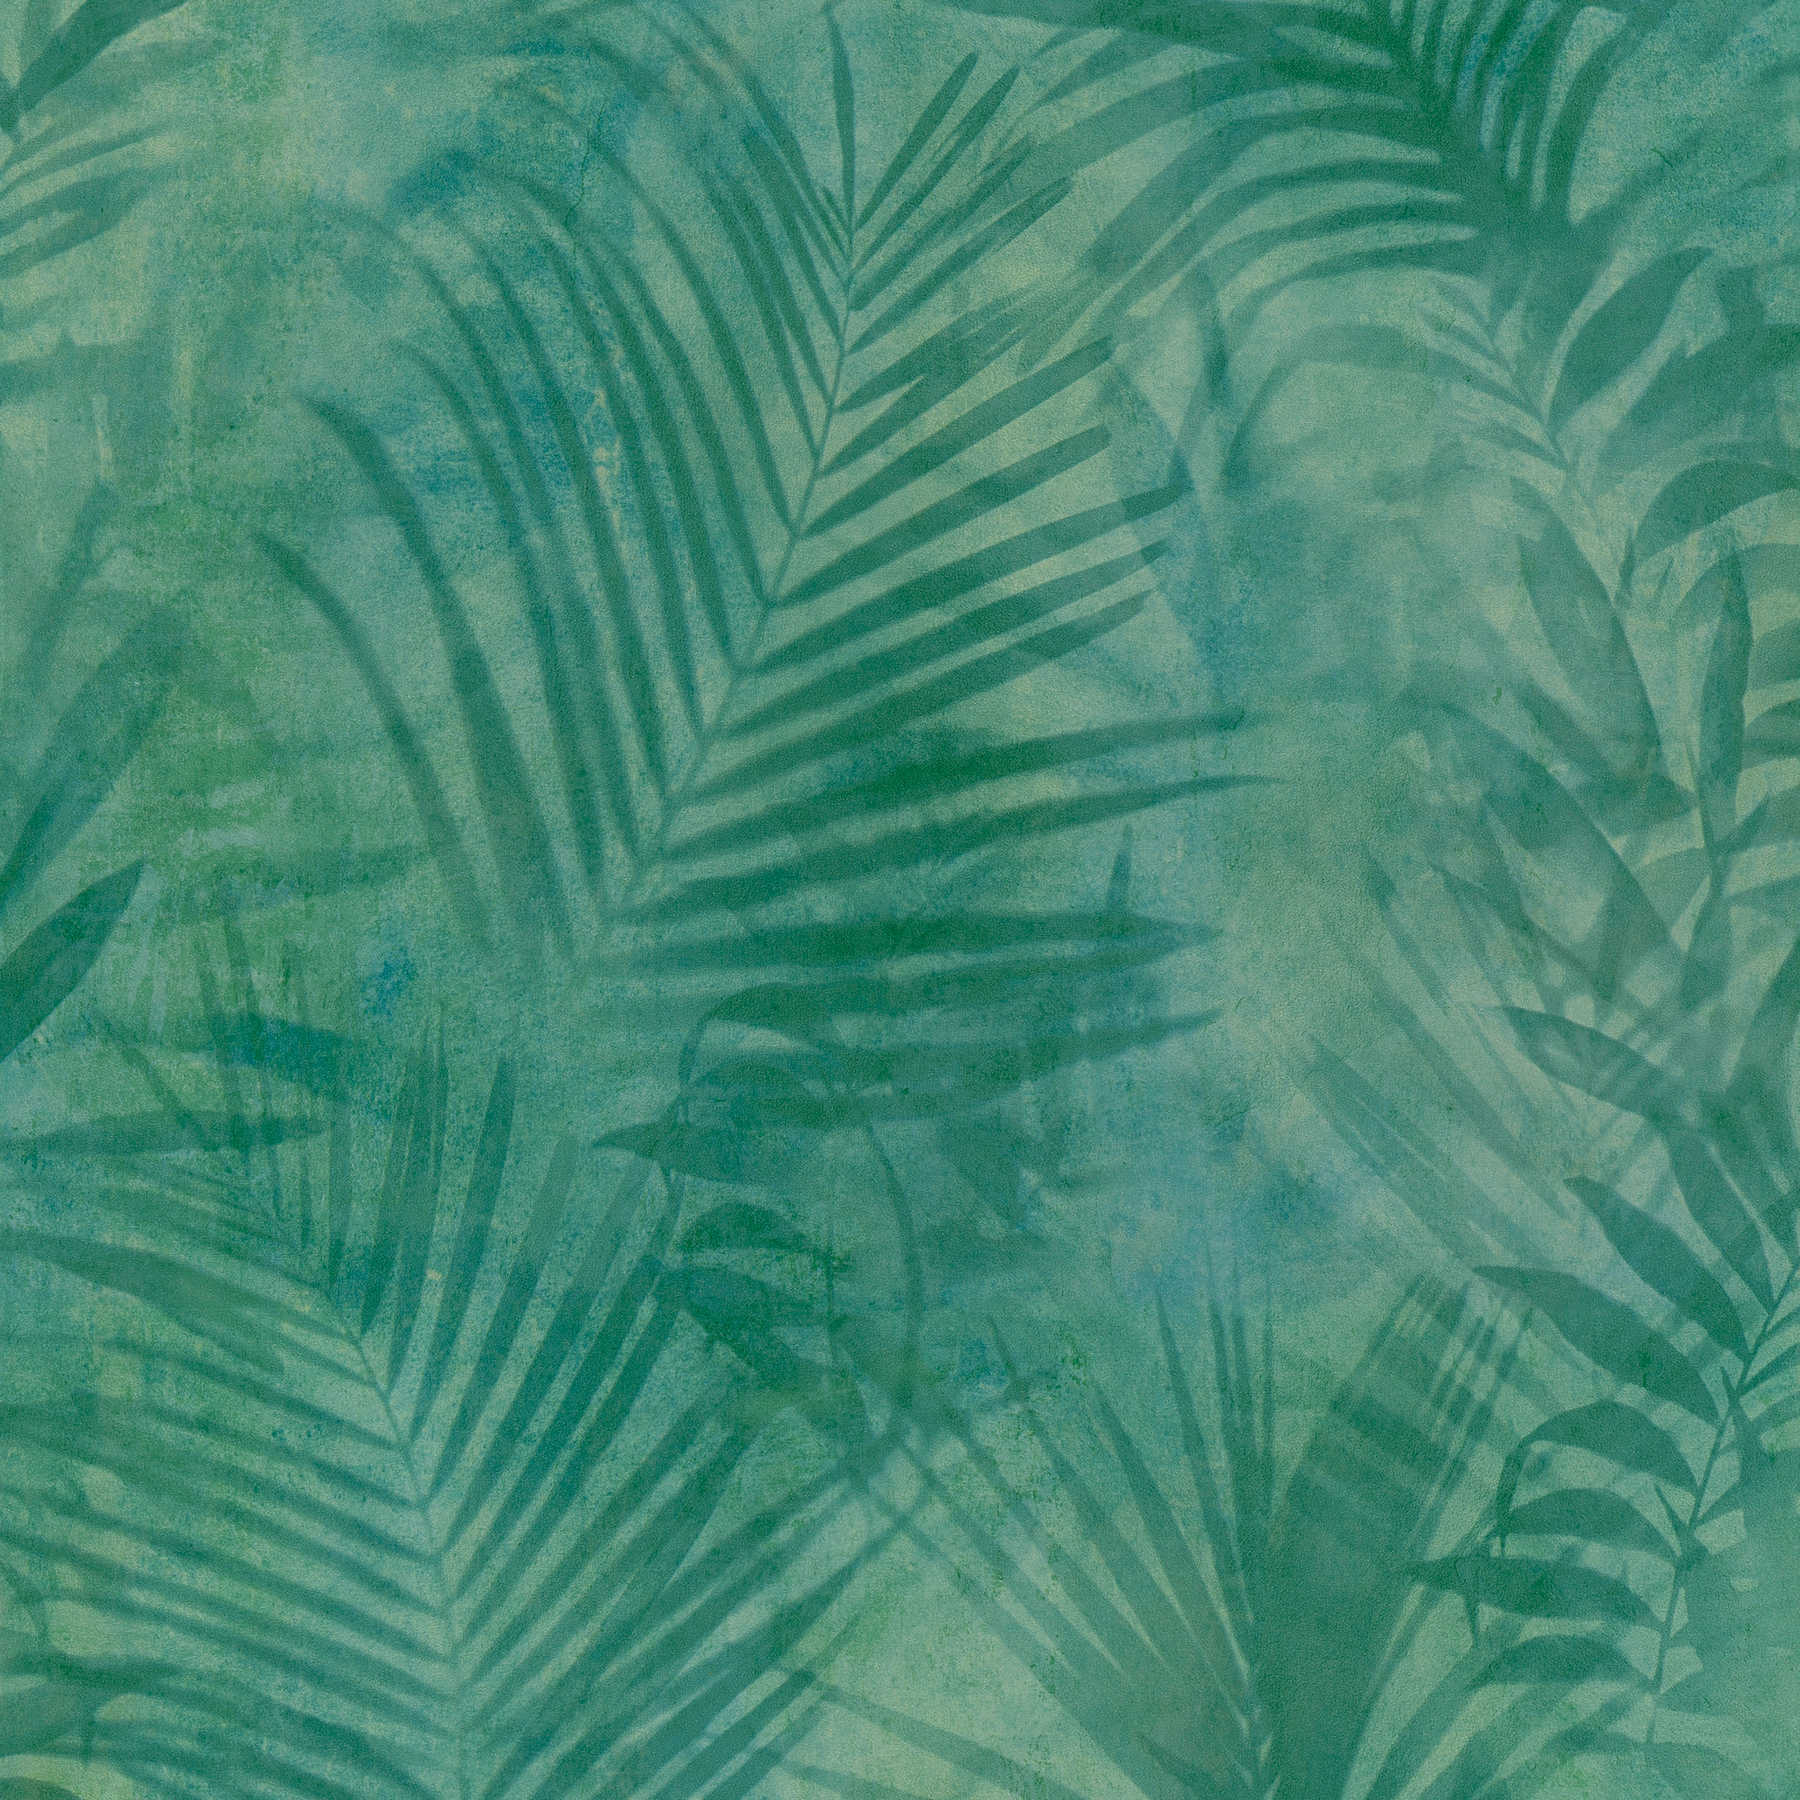         Tapete Palmenmuster in Leinenoptik – Grün, Blau, Gelb
    